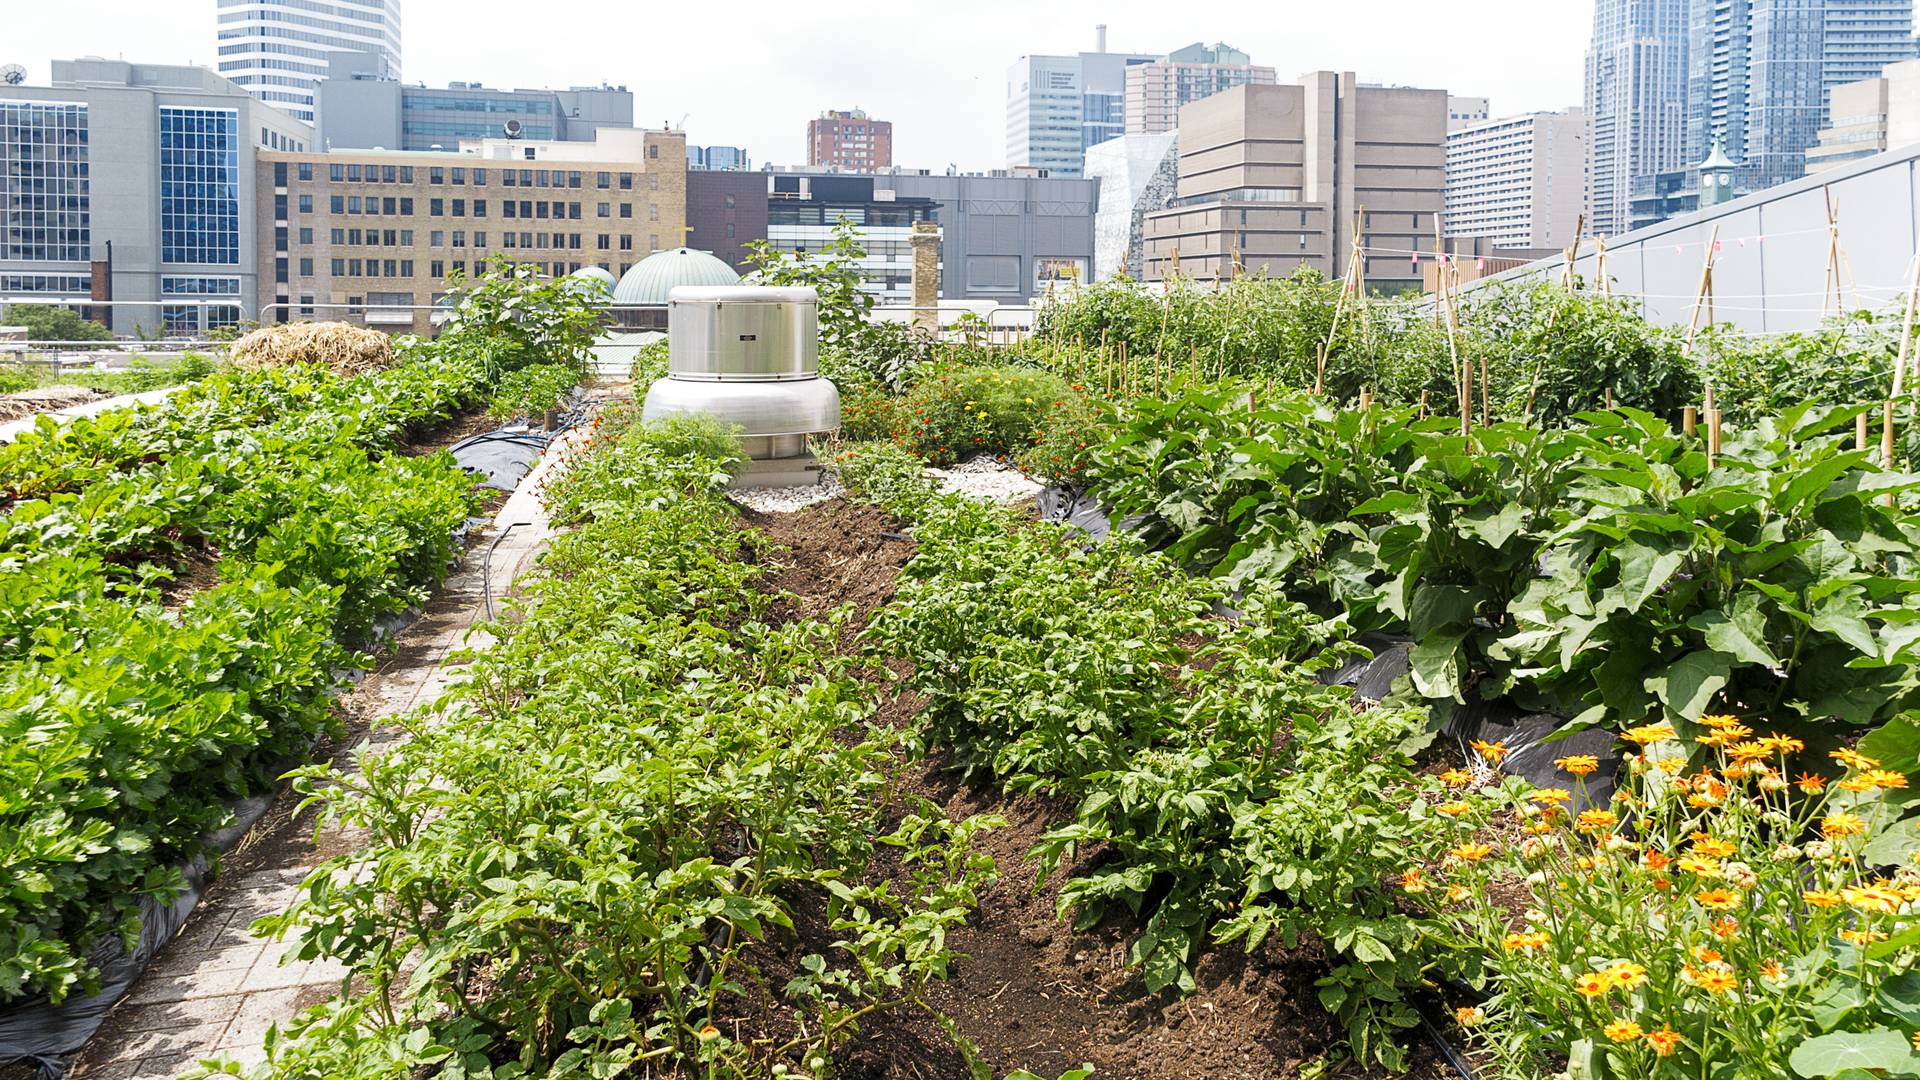 Article en-us | Urban horticulture